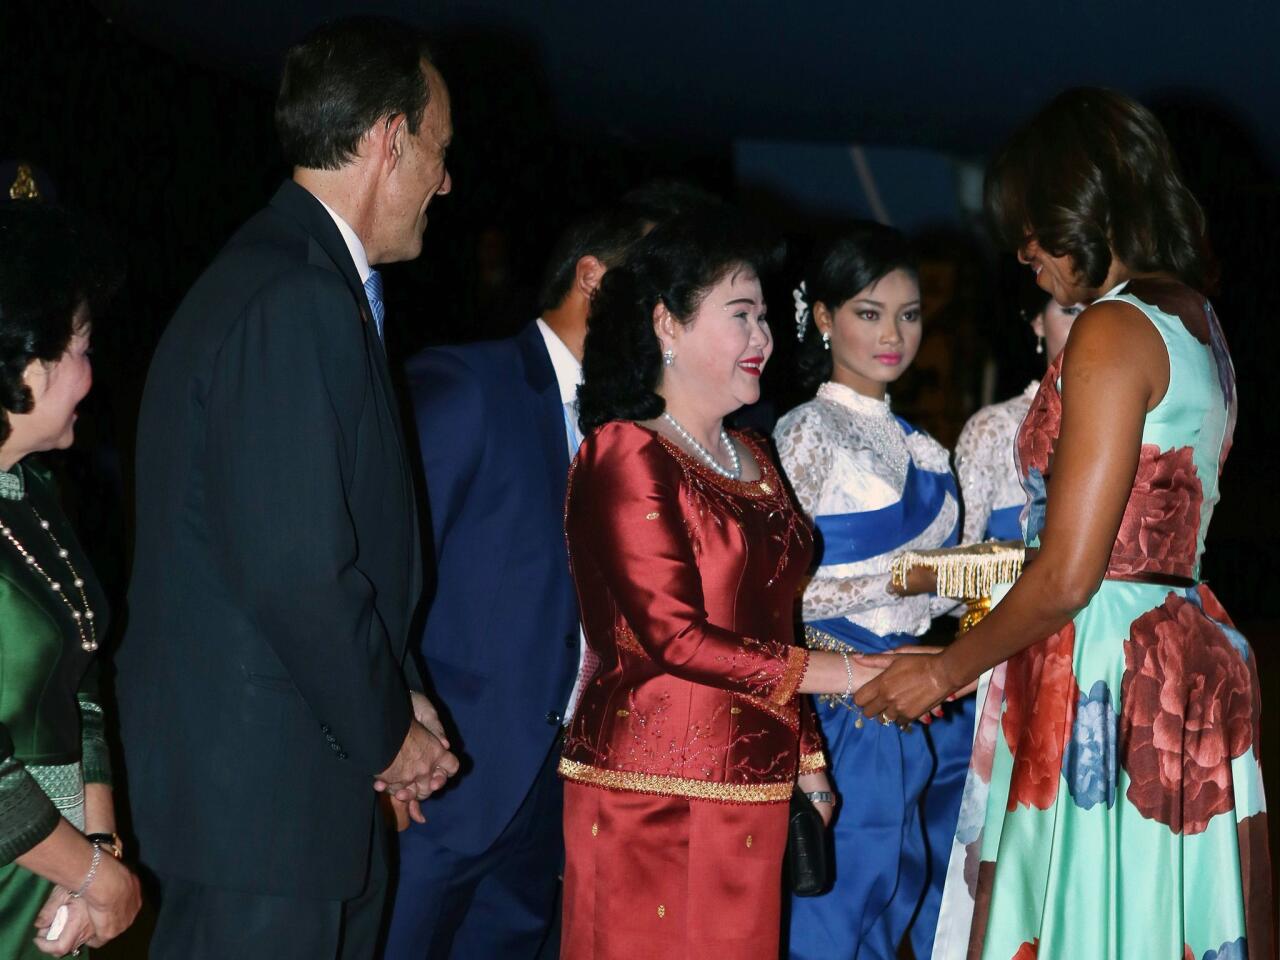 Michelle Obama is Asia